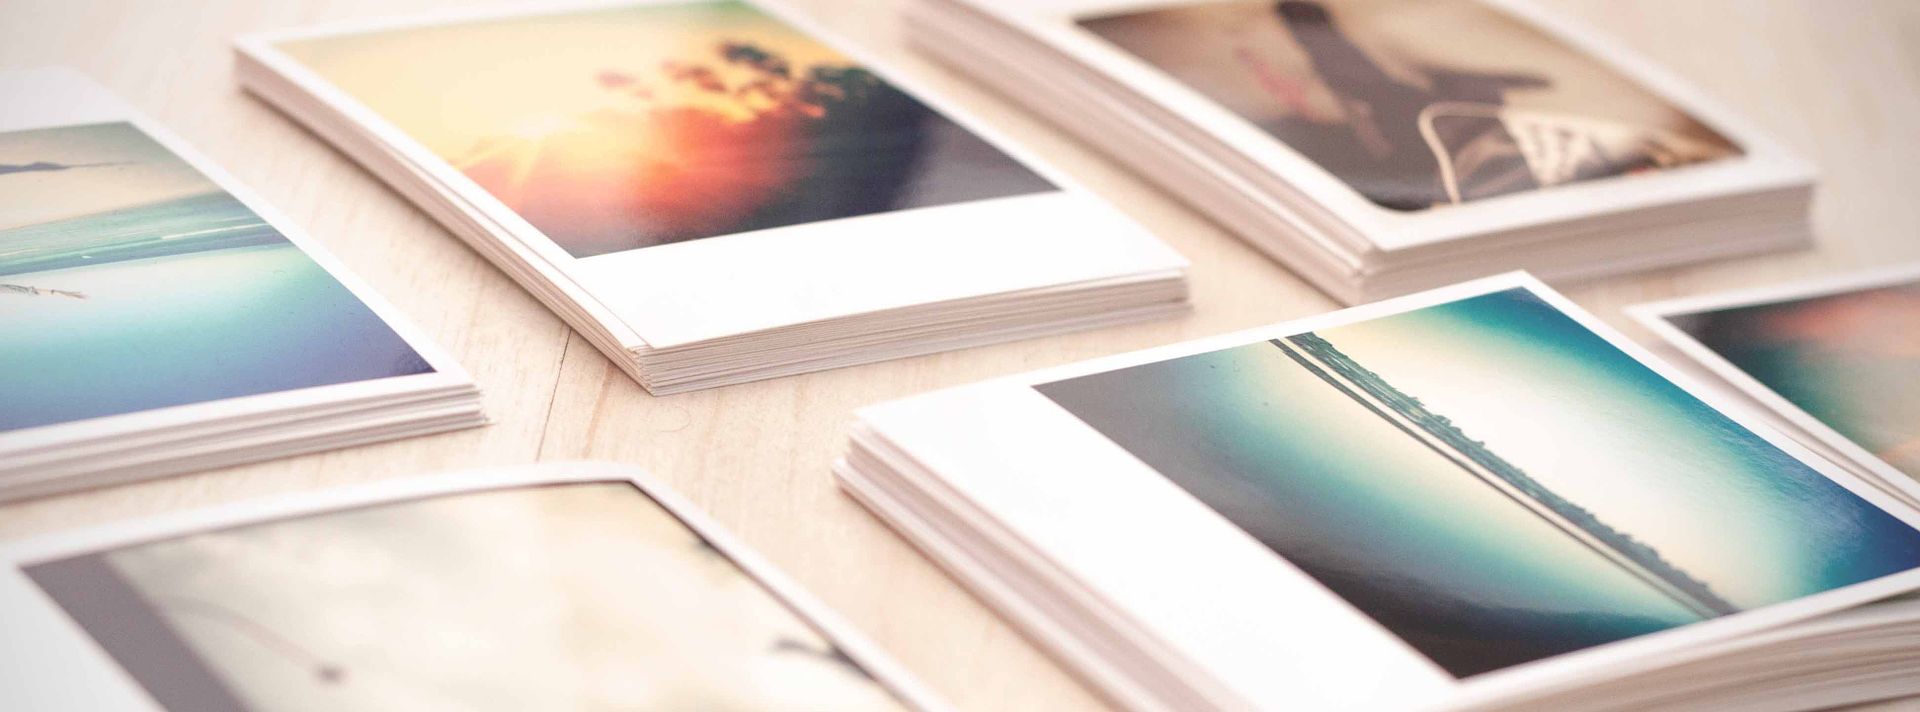 Retro Polaroid-style photo prints from Printic | Cool Mom Tech